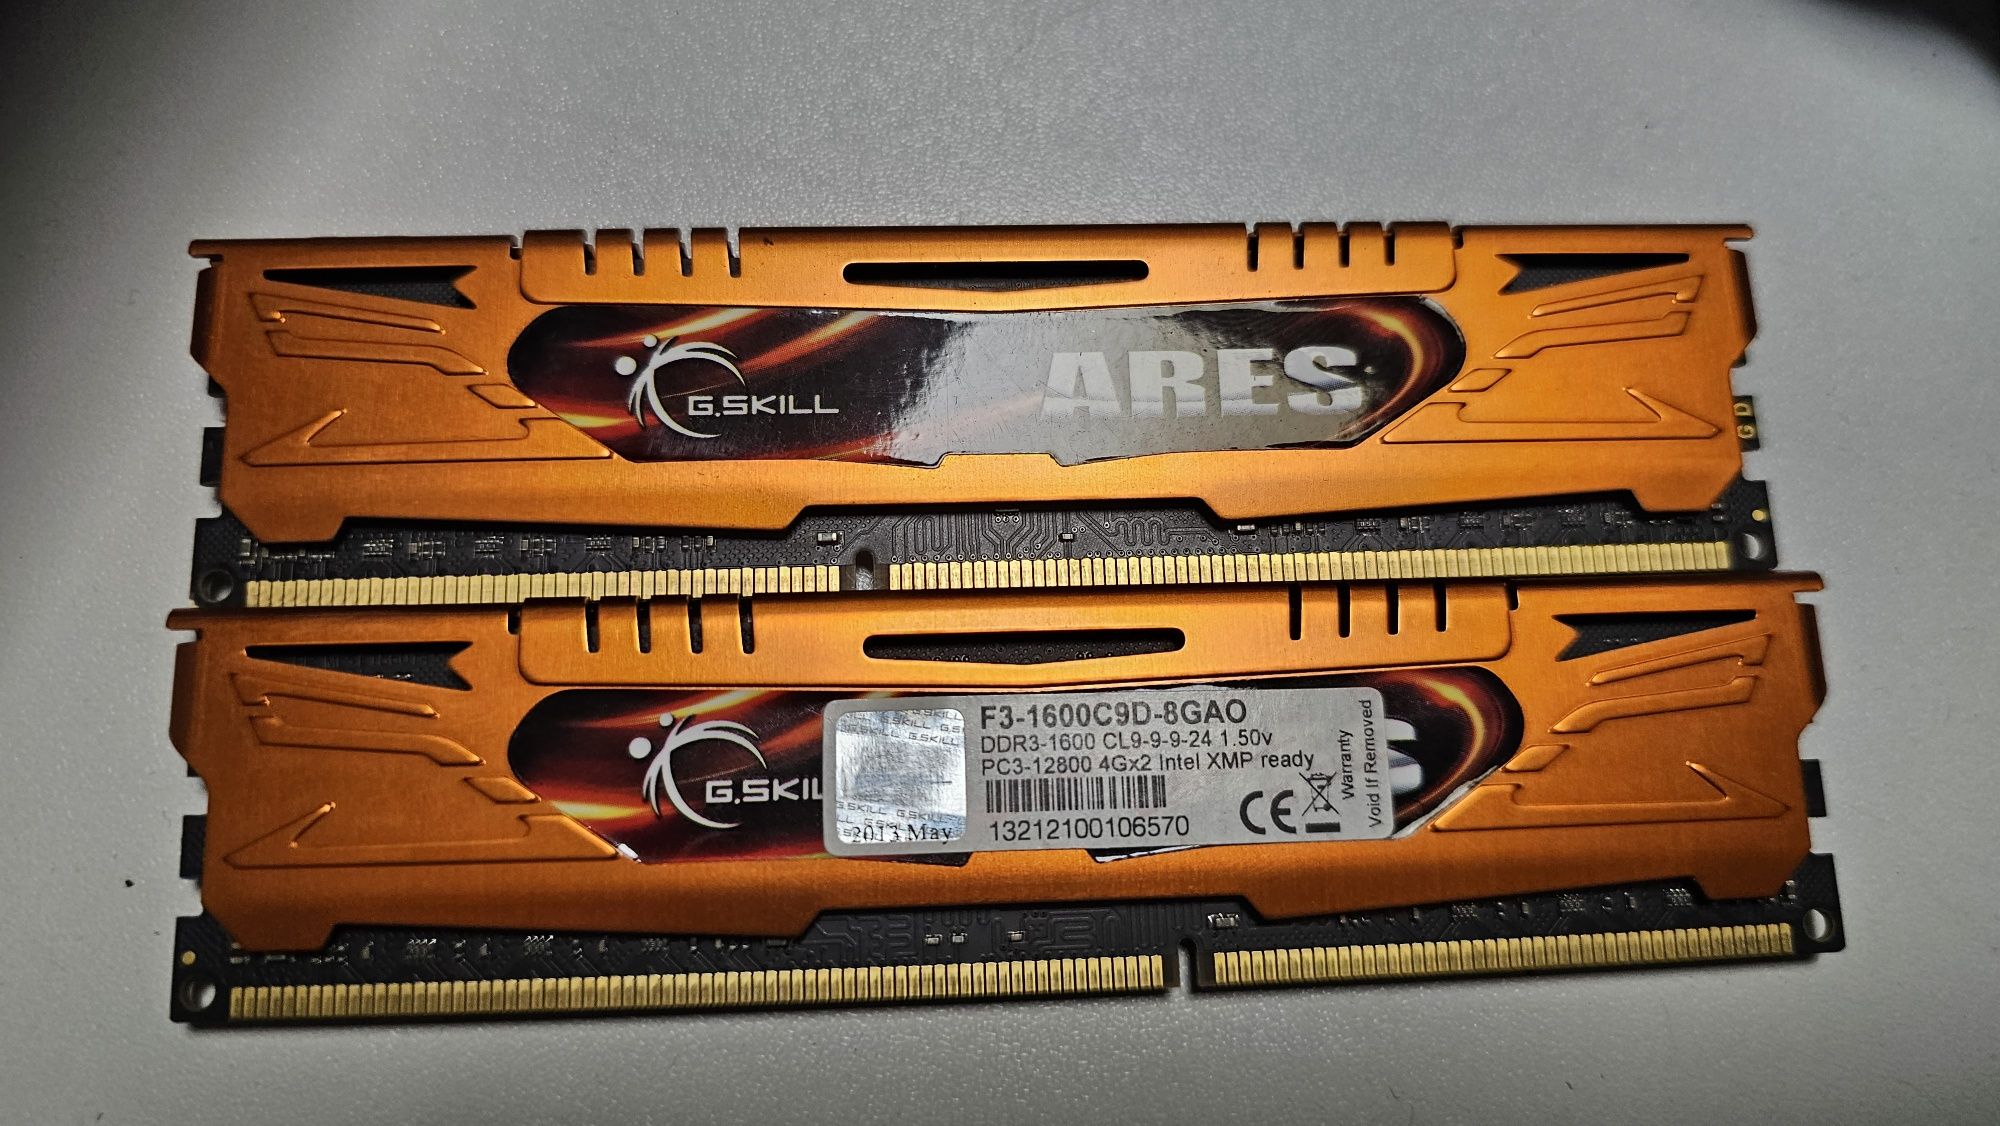 G.skill Ares RAM 1600Mhz 2x4GB 8GB DDR3